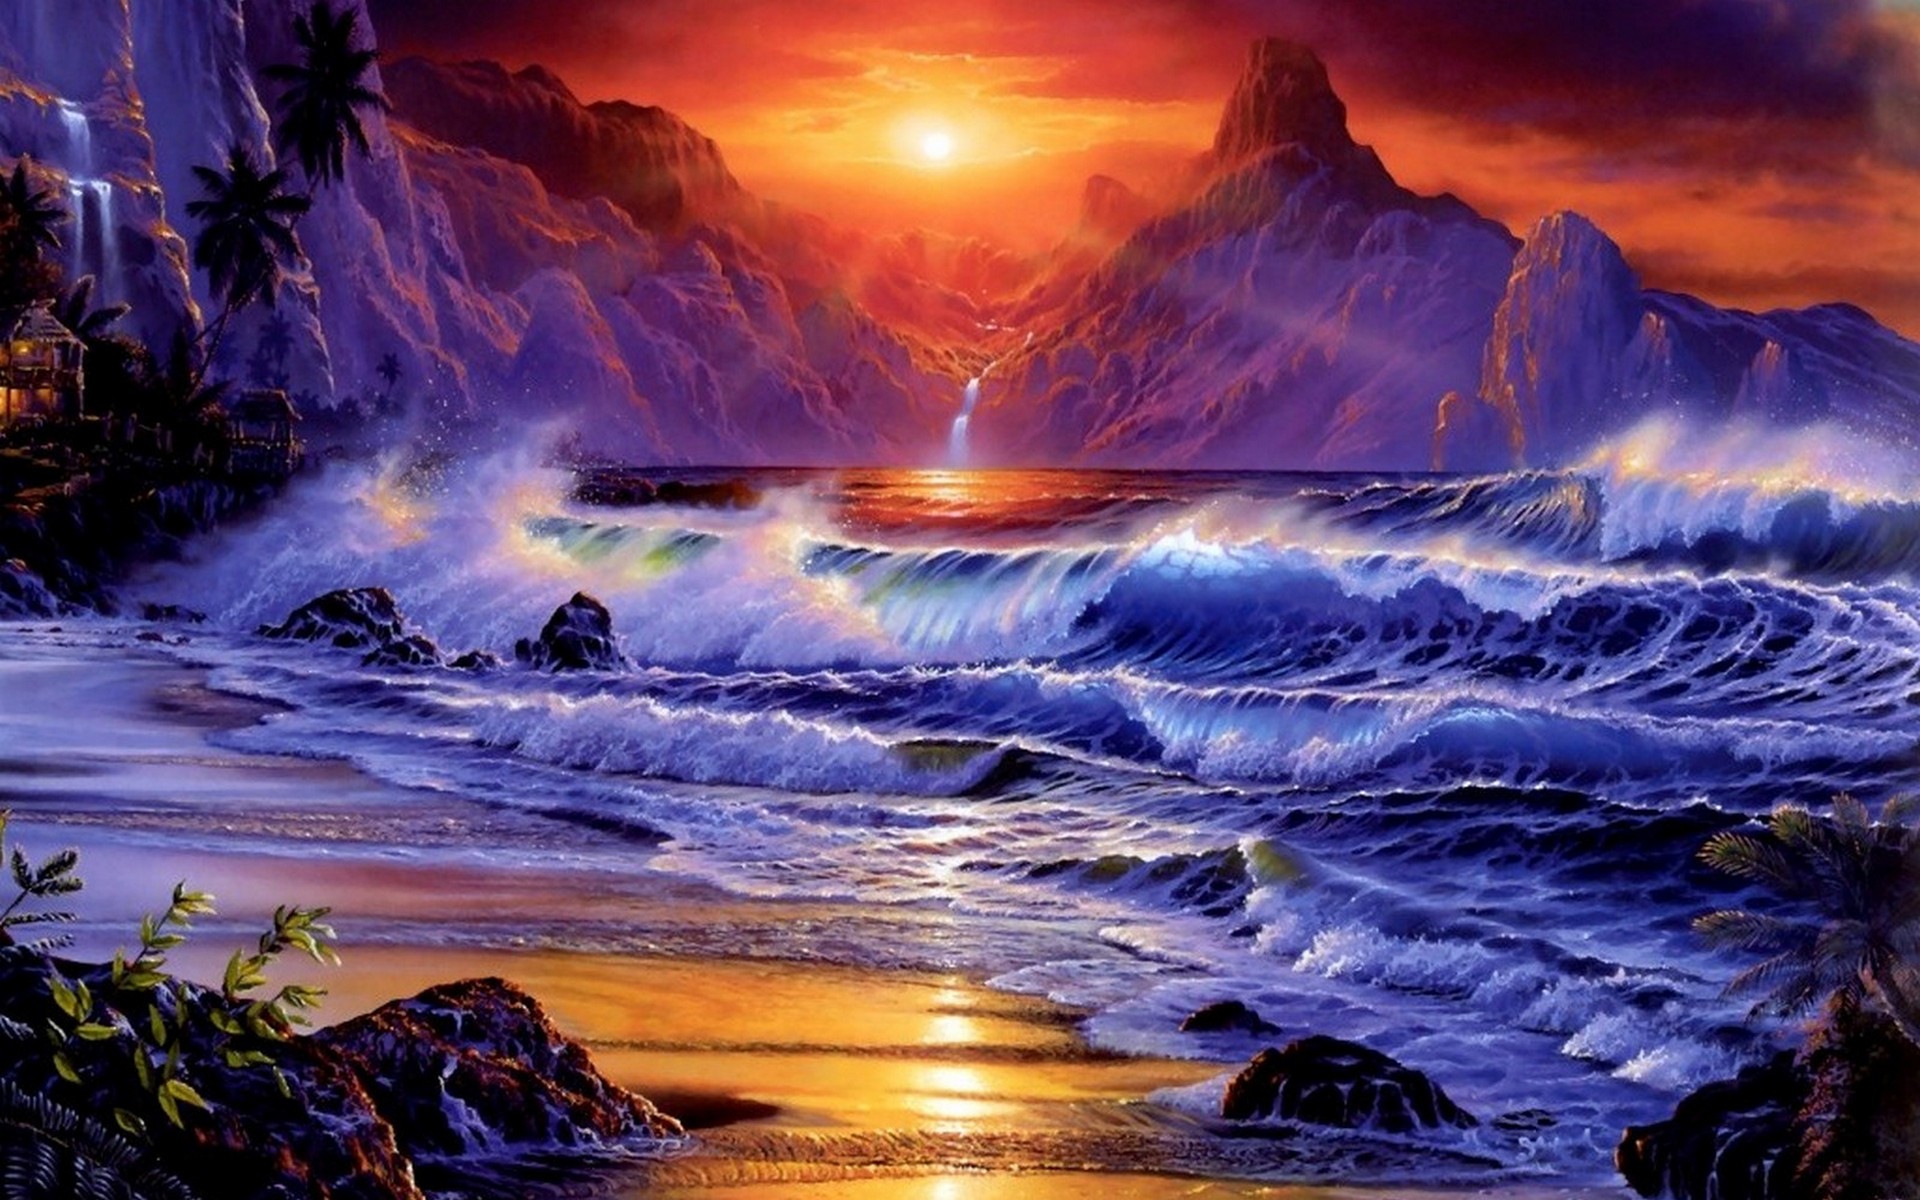 22+] Beach Sunset Ocean Waves Wallpapers - WallpaperSafari